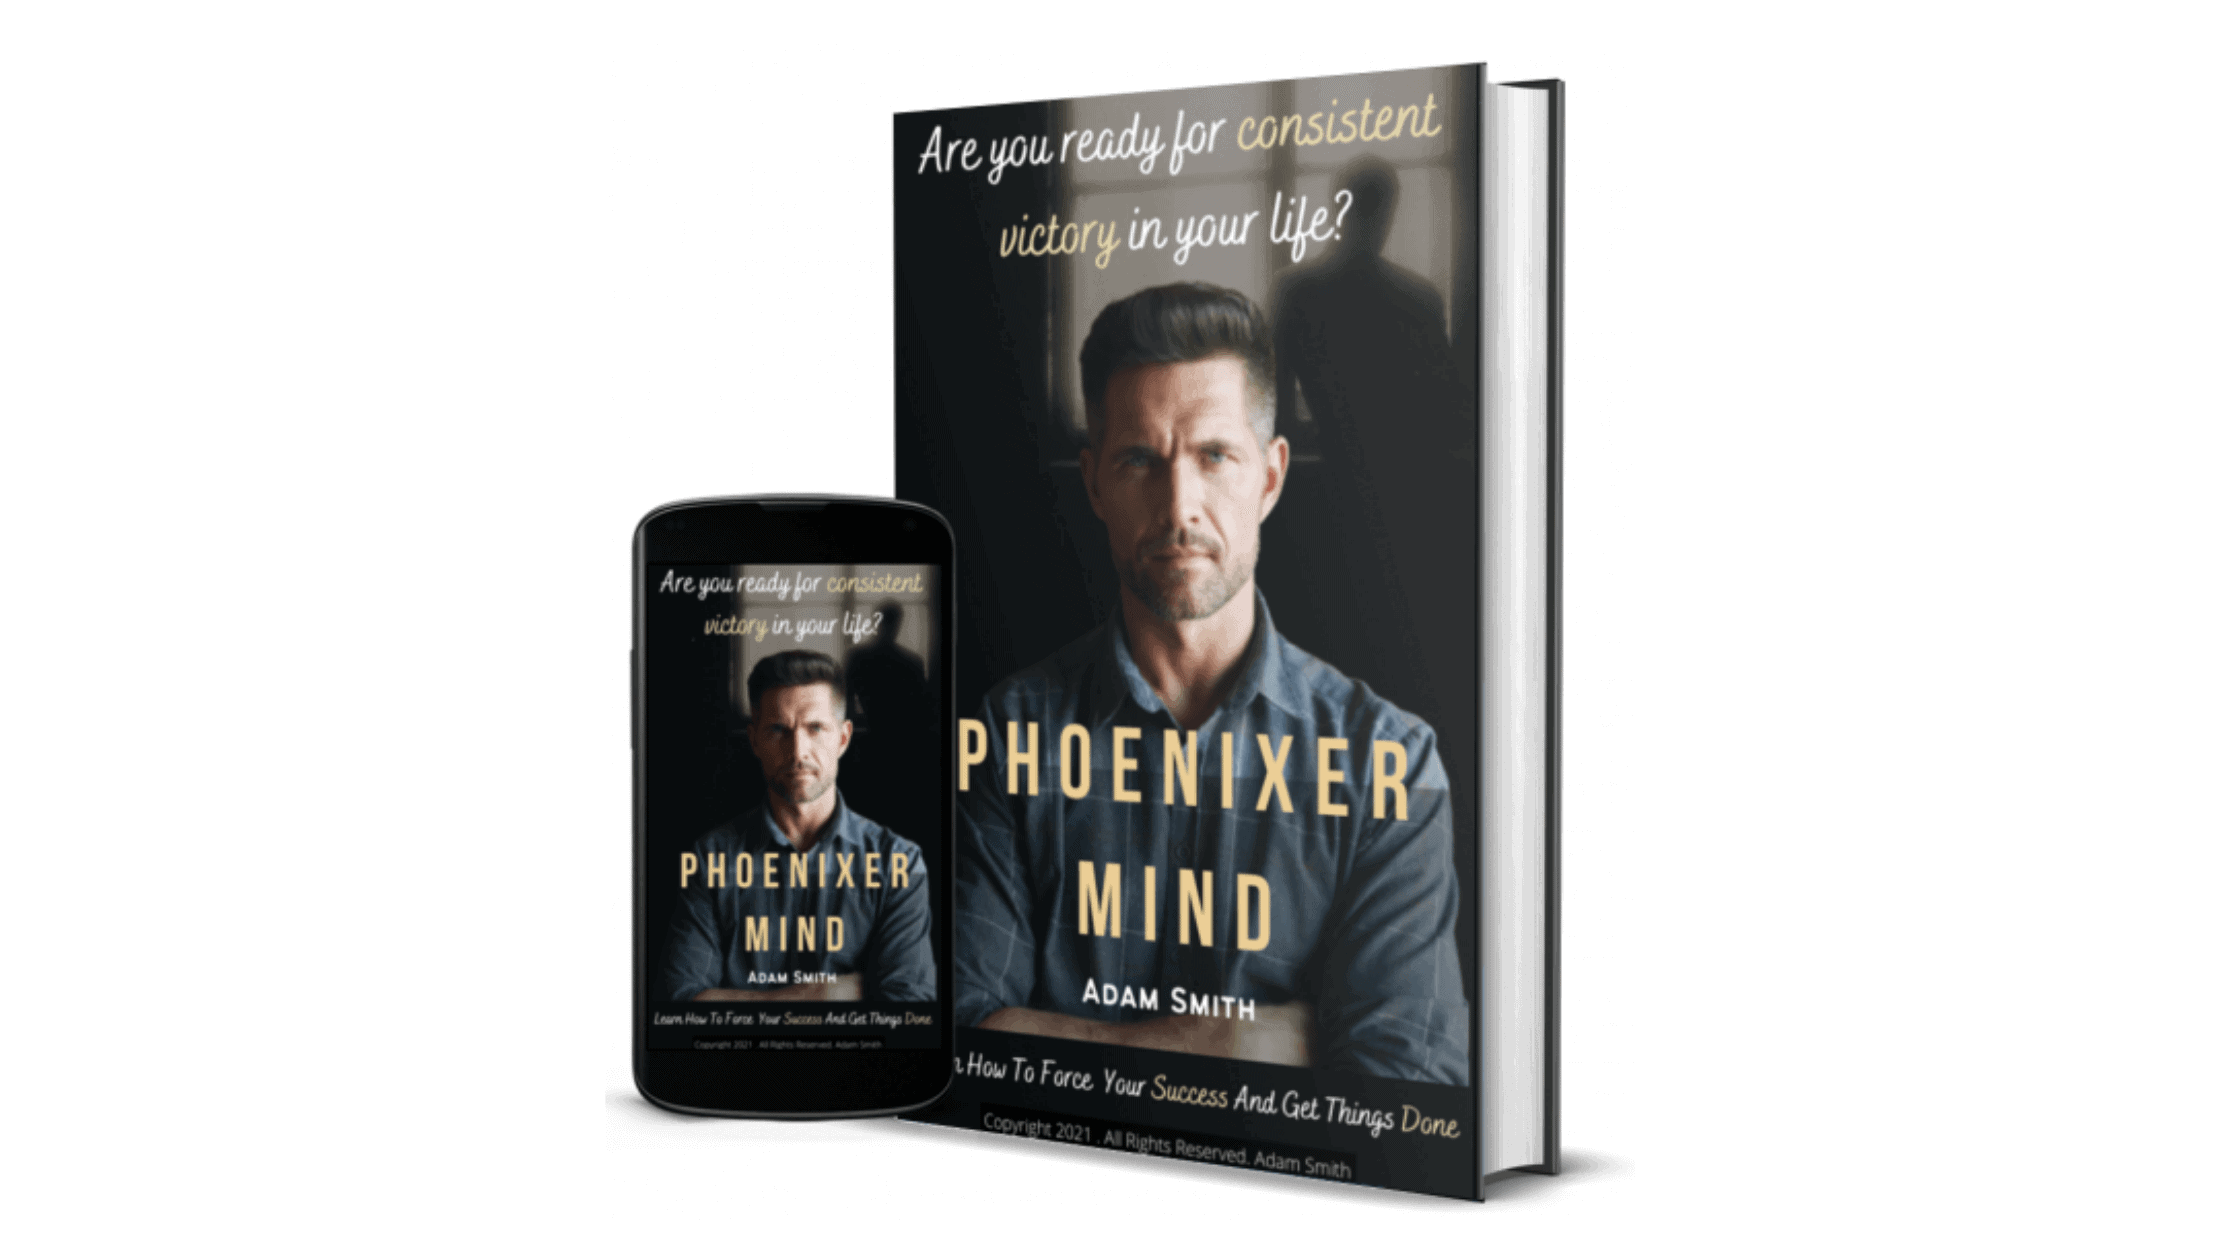 Phoenixer Mind Reviews